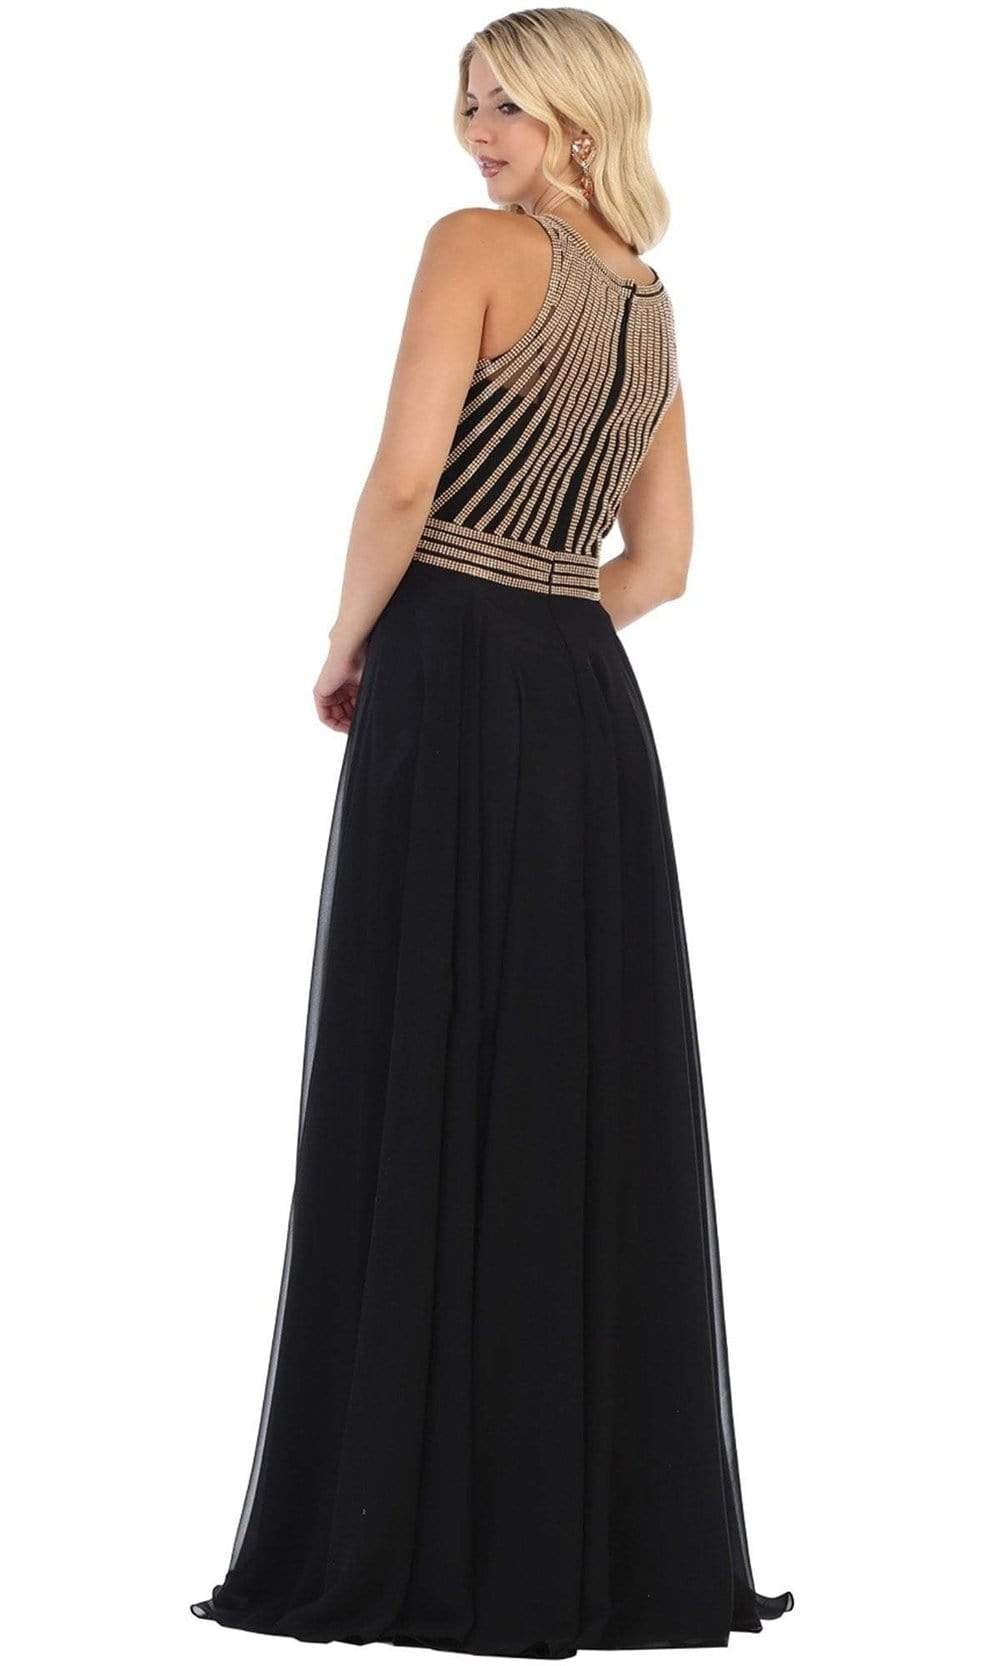 May Queen - MQ1586 Stripe Beaded Illusion Jewel Chiffon Gown Bridesmaid Dresses